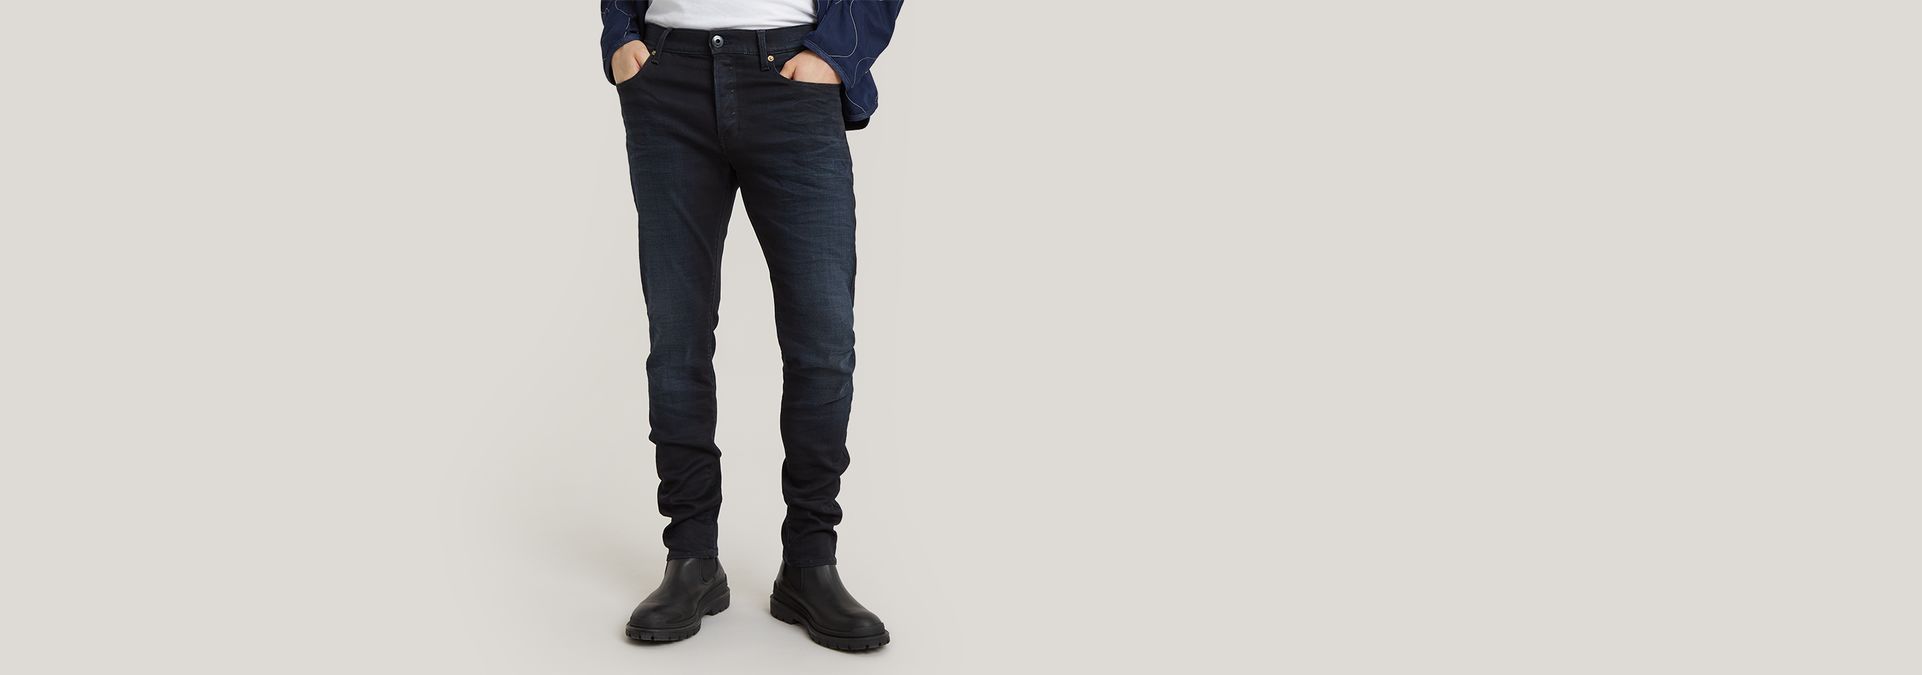 Jeans g-star raw mujer tienda slim-fit pantalones denim, jeans, azul,  autor, Lincoln png